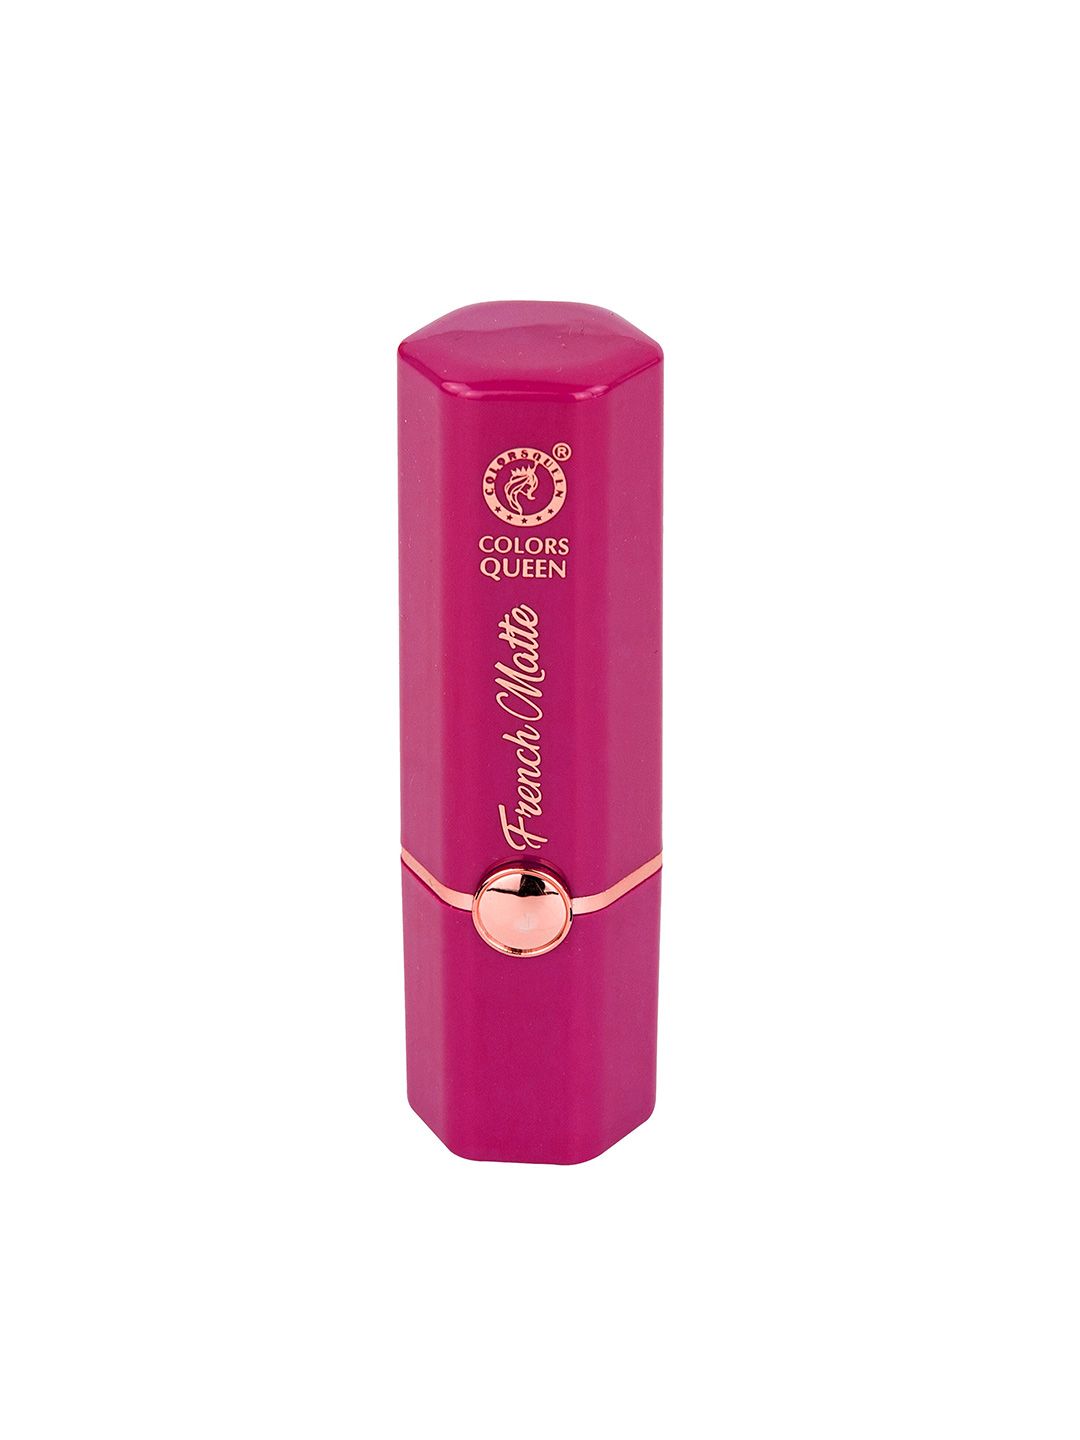 Colors Queen  Super Matte Flat Velvet Lipstick - Glam pink - 7 g Price in India